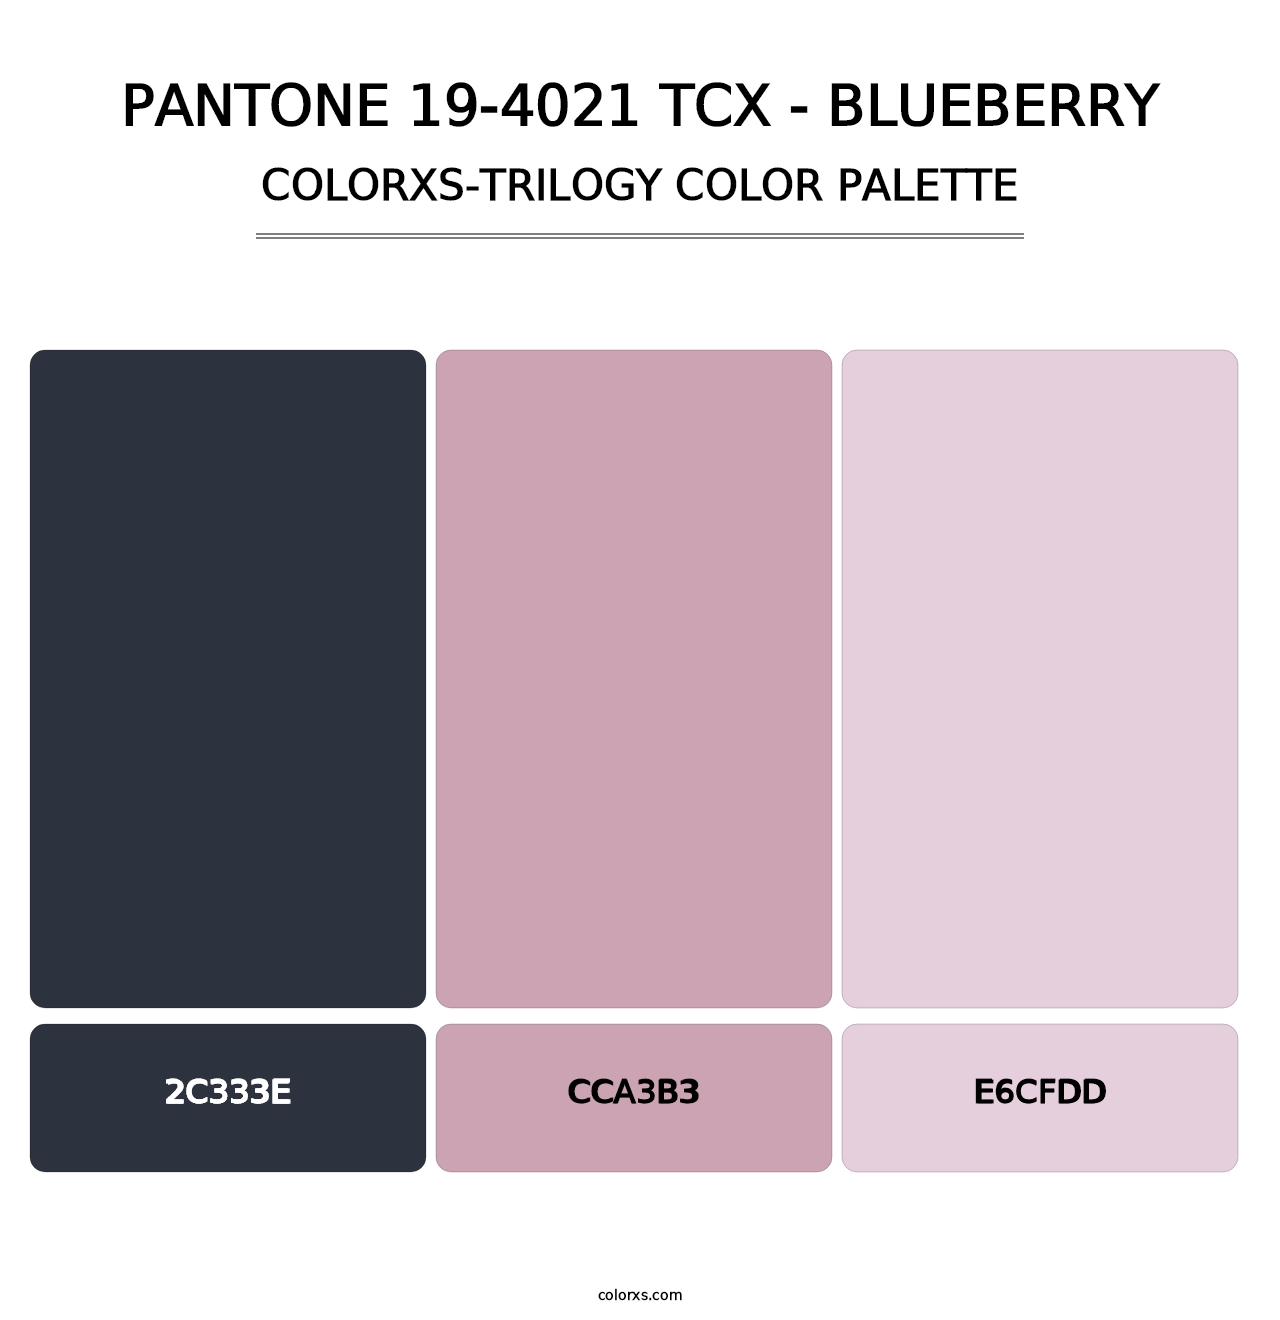 PANTONE 19-4021 TCX - Blueberry - Colorxs Trilogy Palette